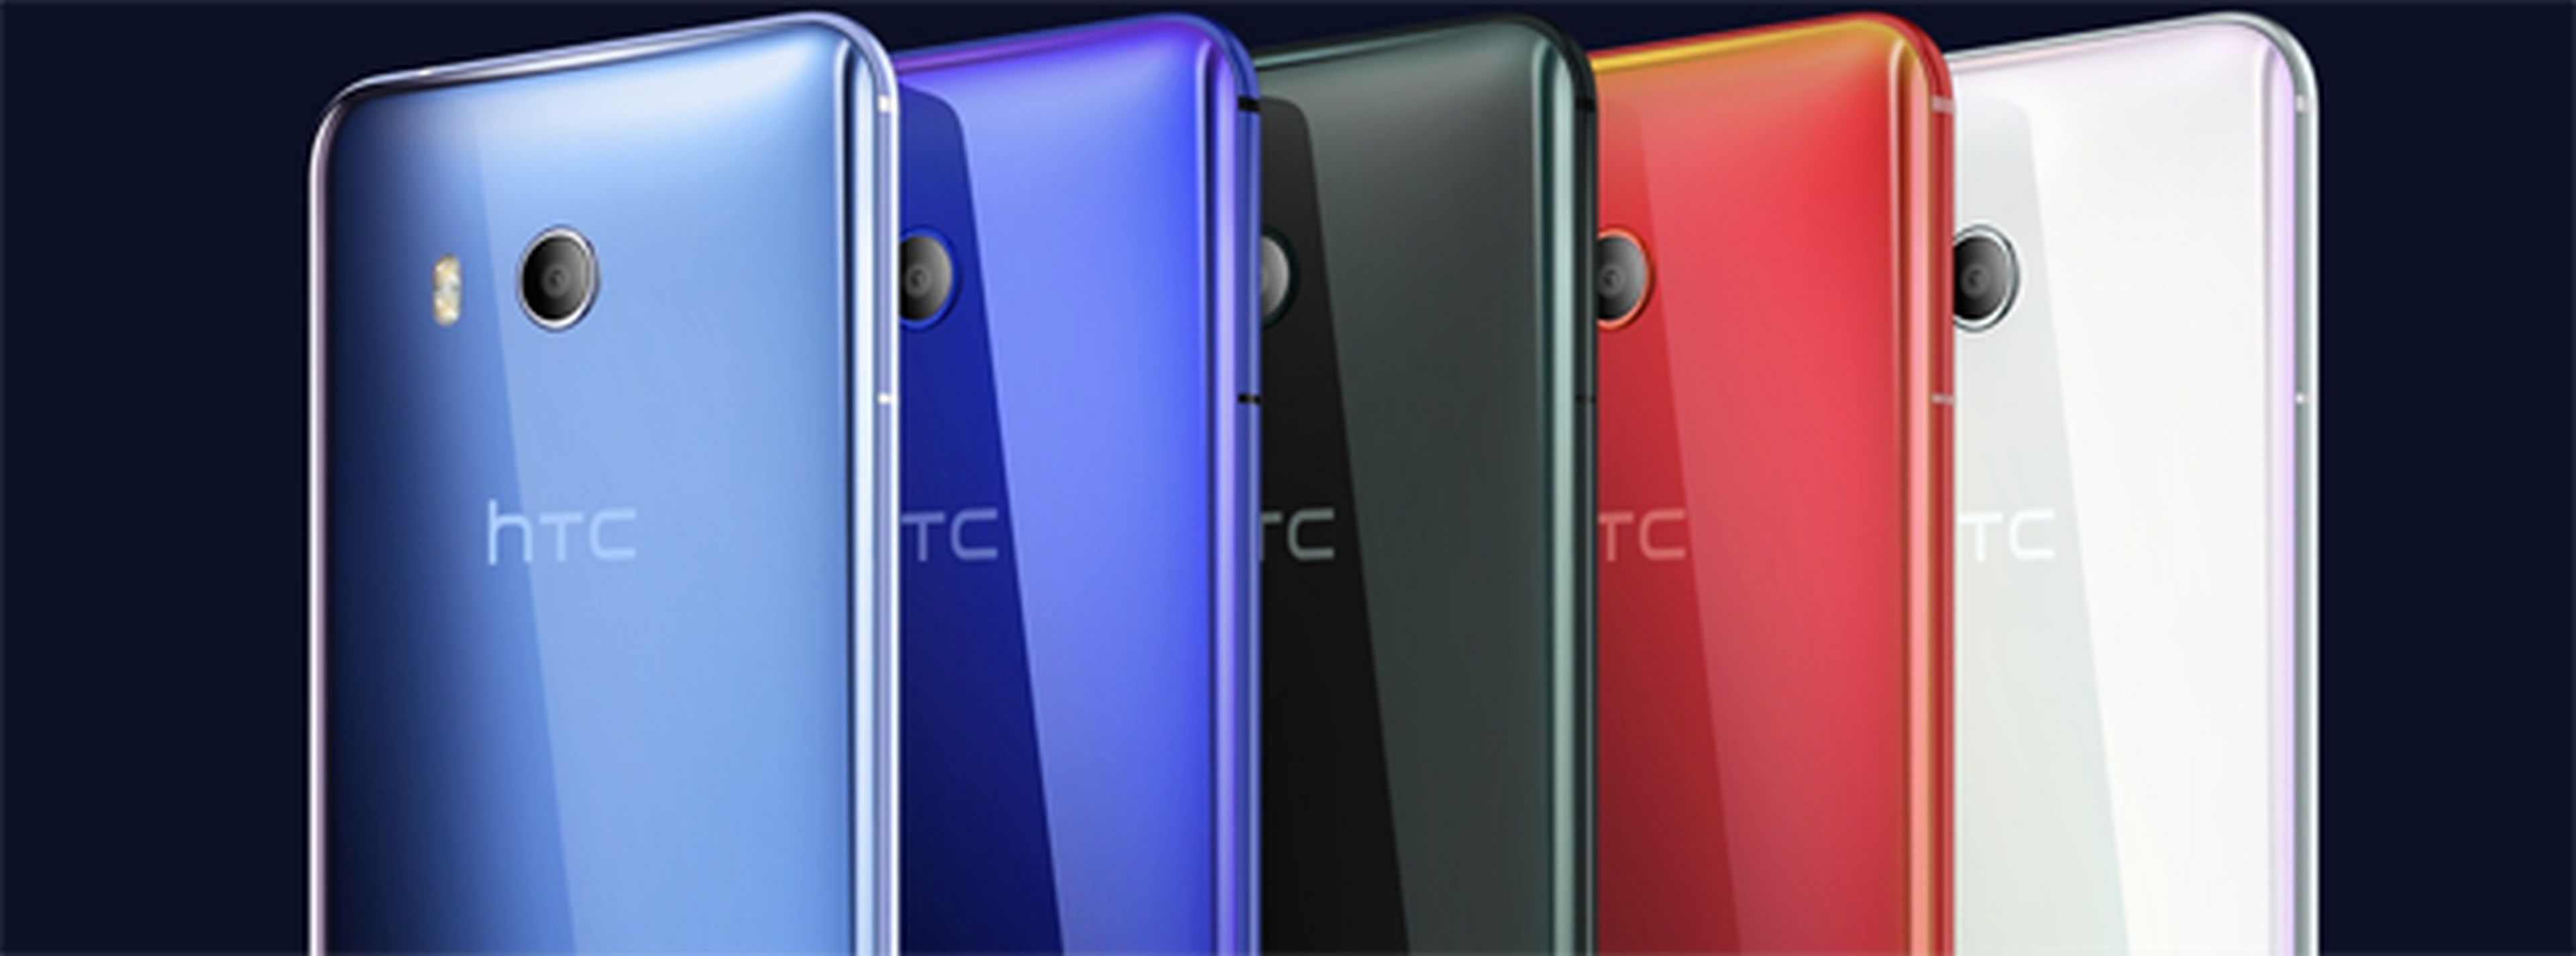 Colores HTC U11